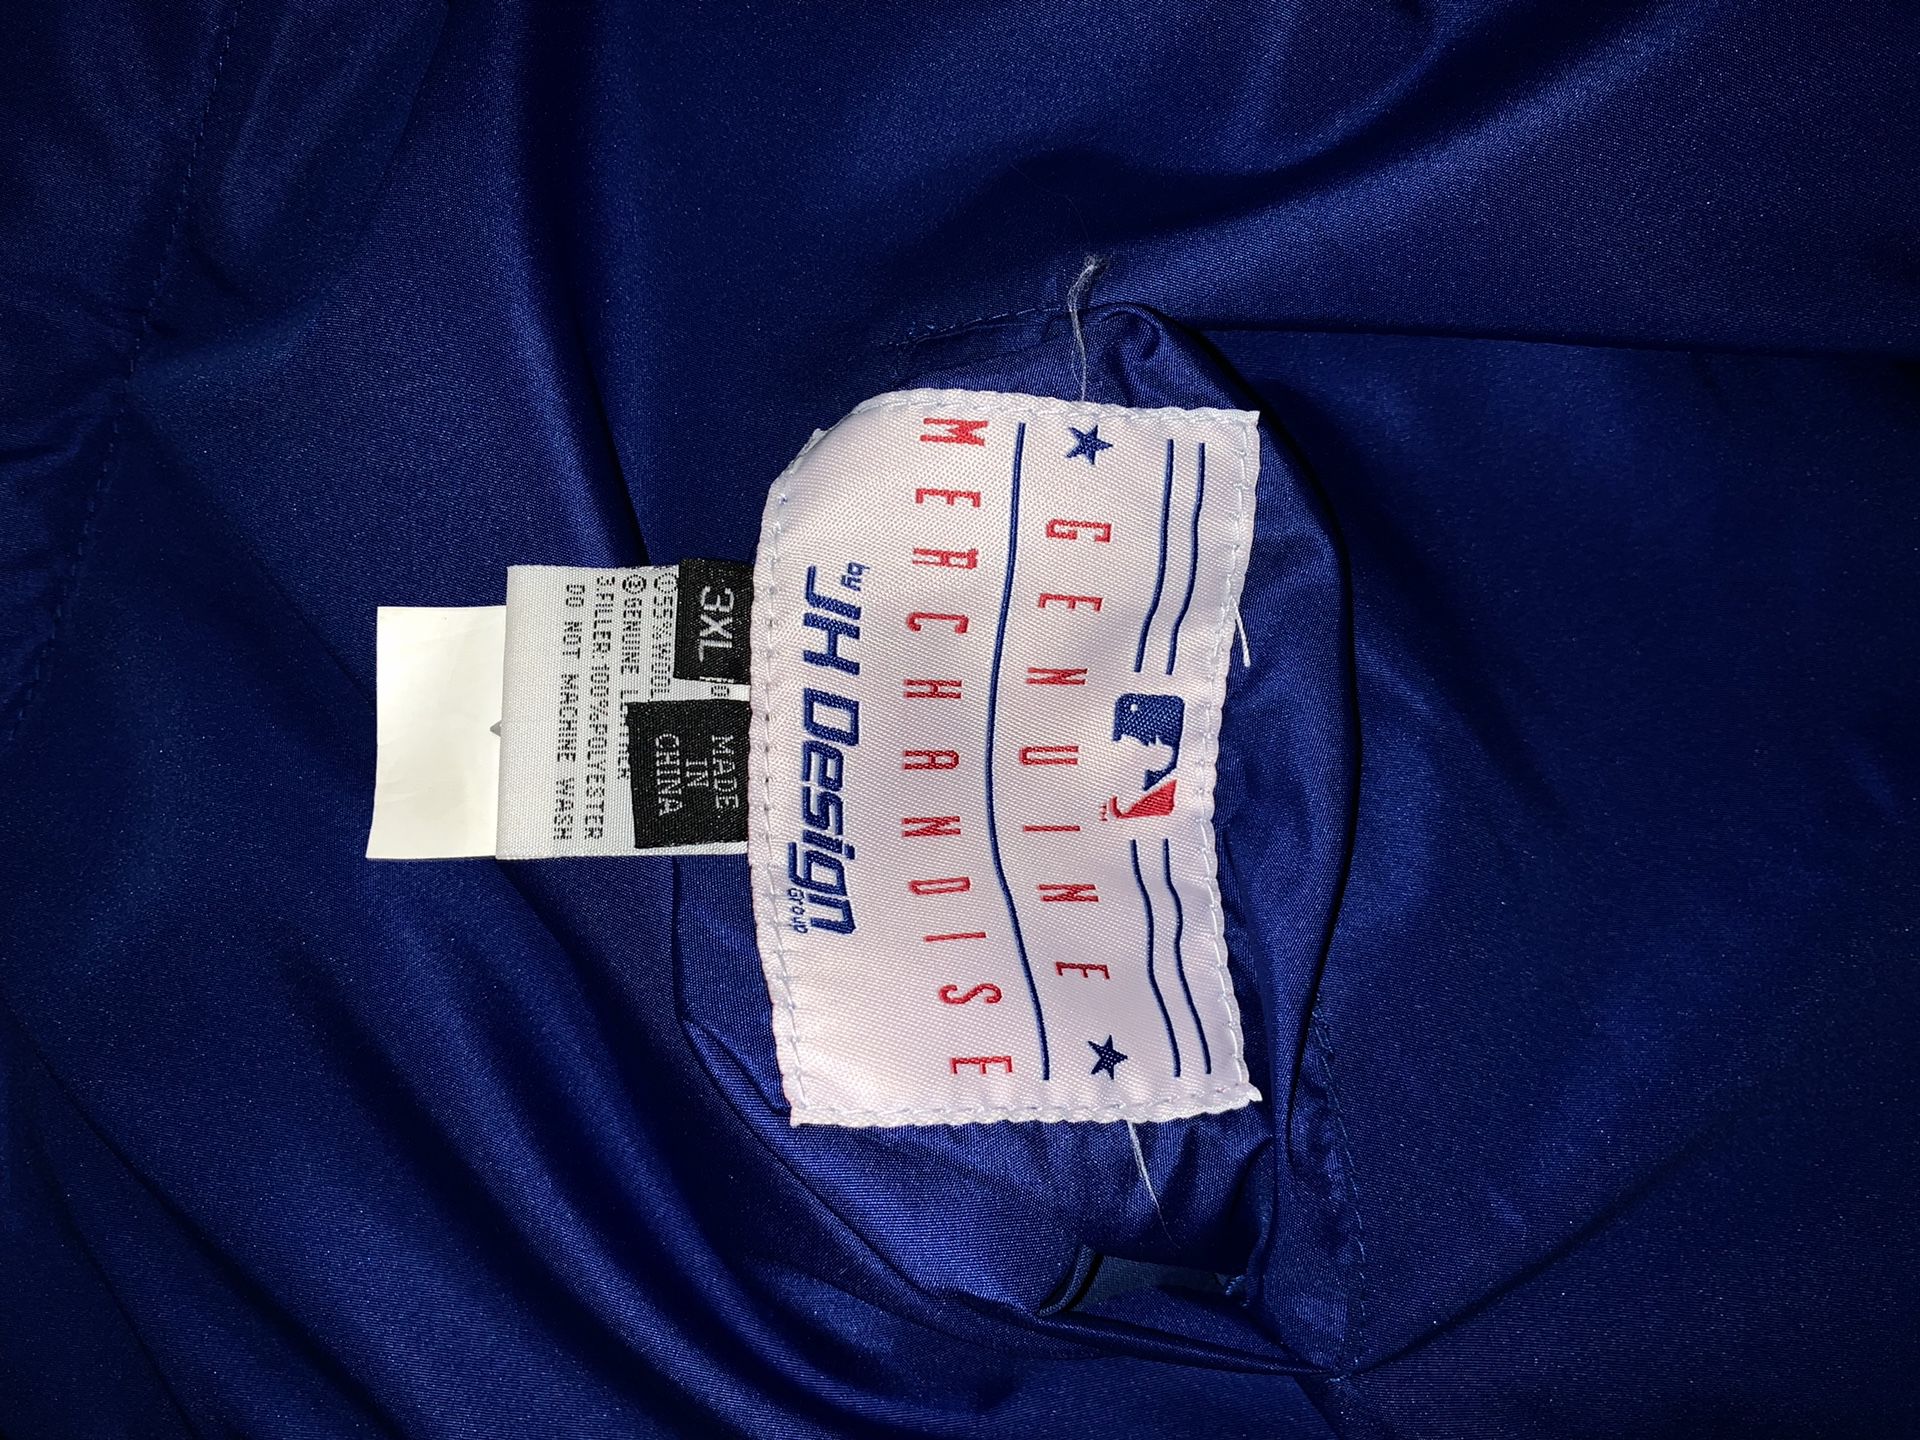 JH Distributors Los Angeles Dodgers Reversible Letterman Mens Jacket (Black/White)